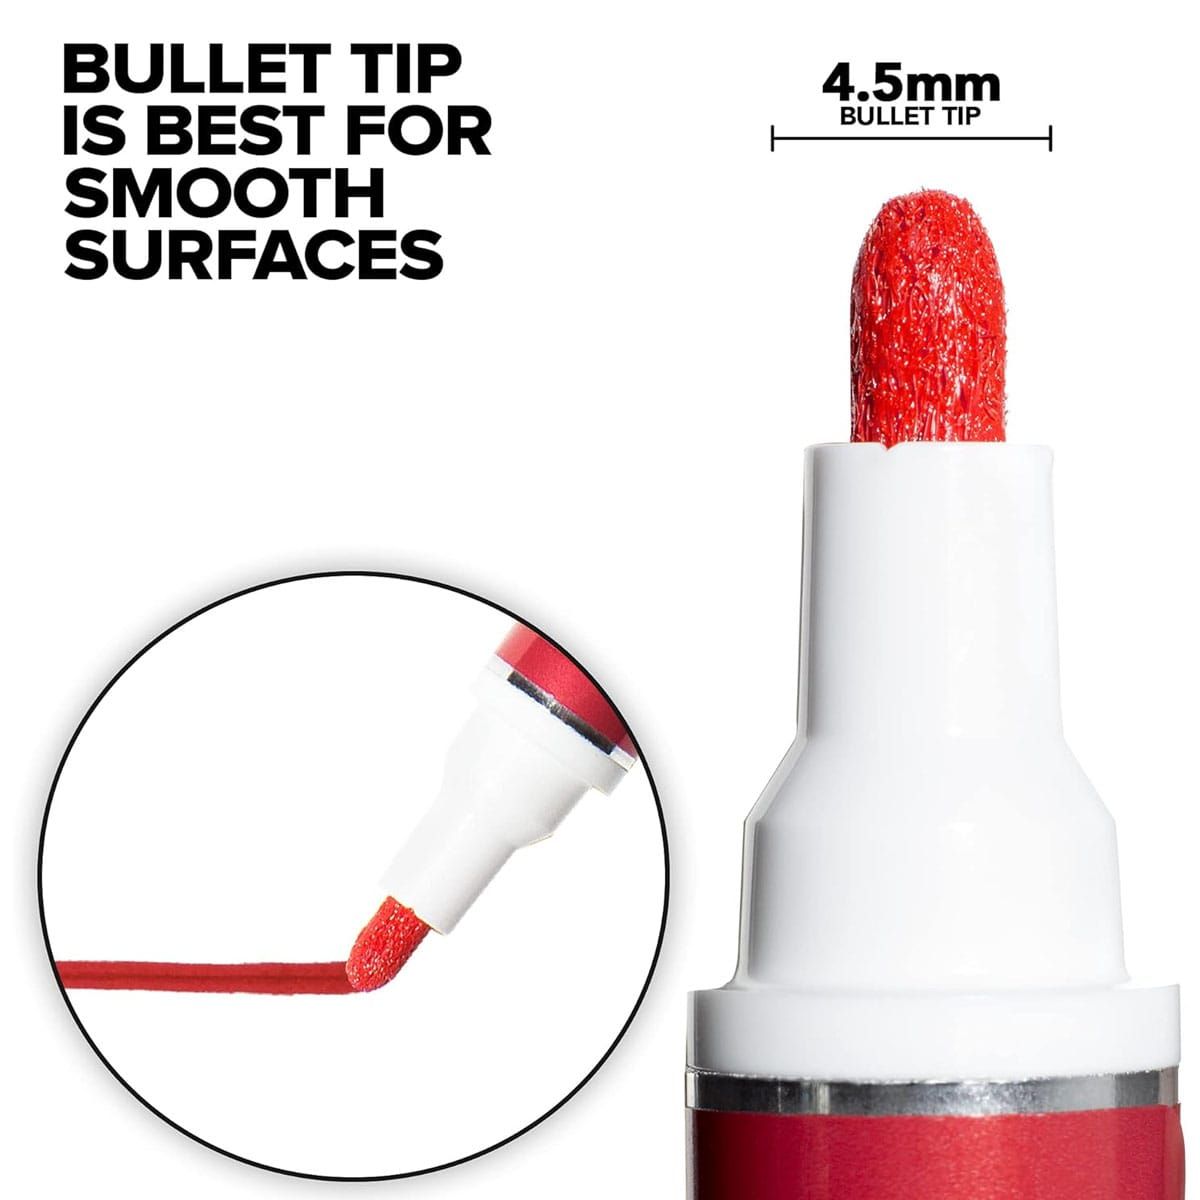 1) Krink K-42 4.5mm Bullet Tip Acrylic Paint Marker